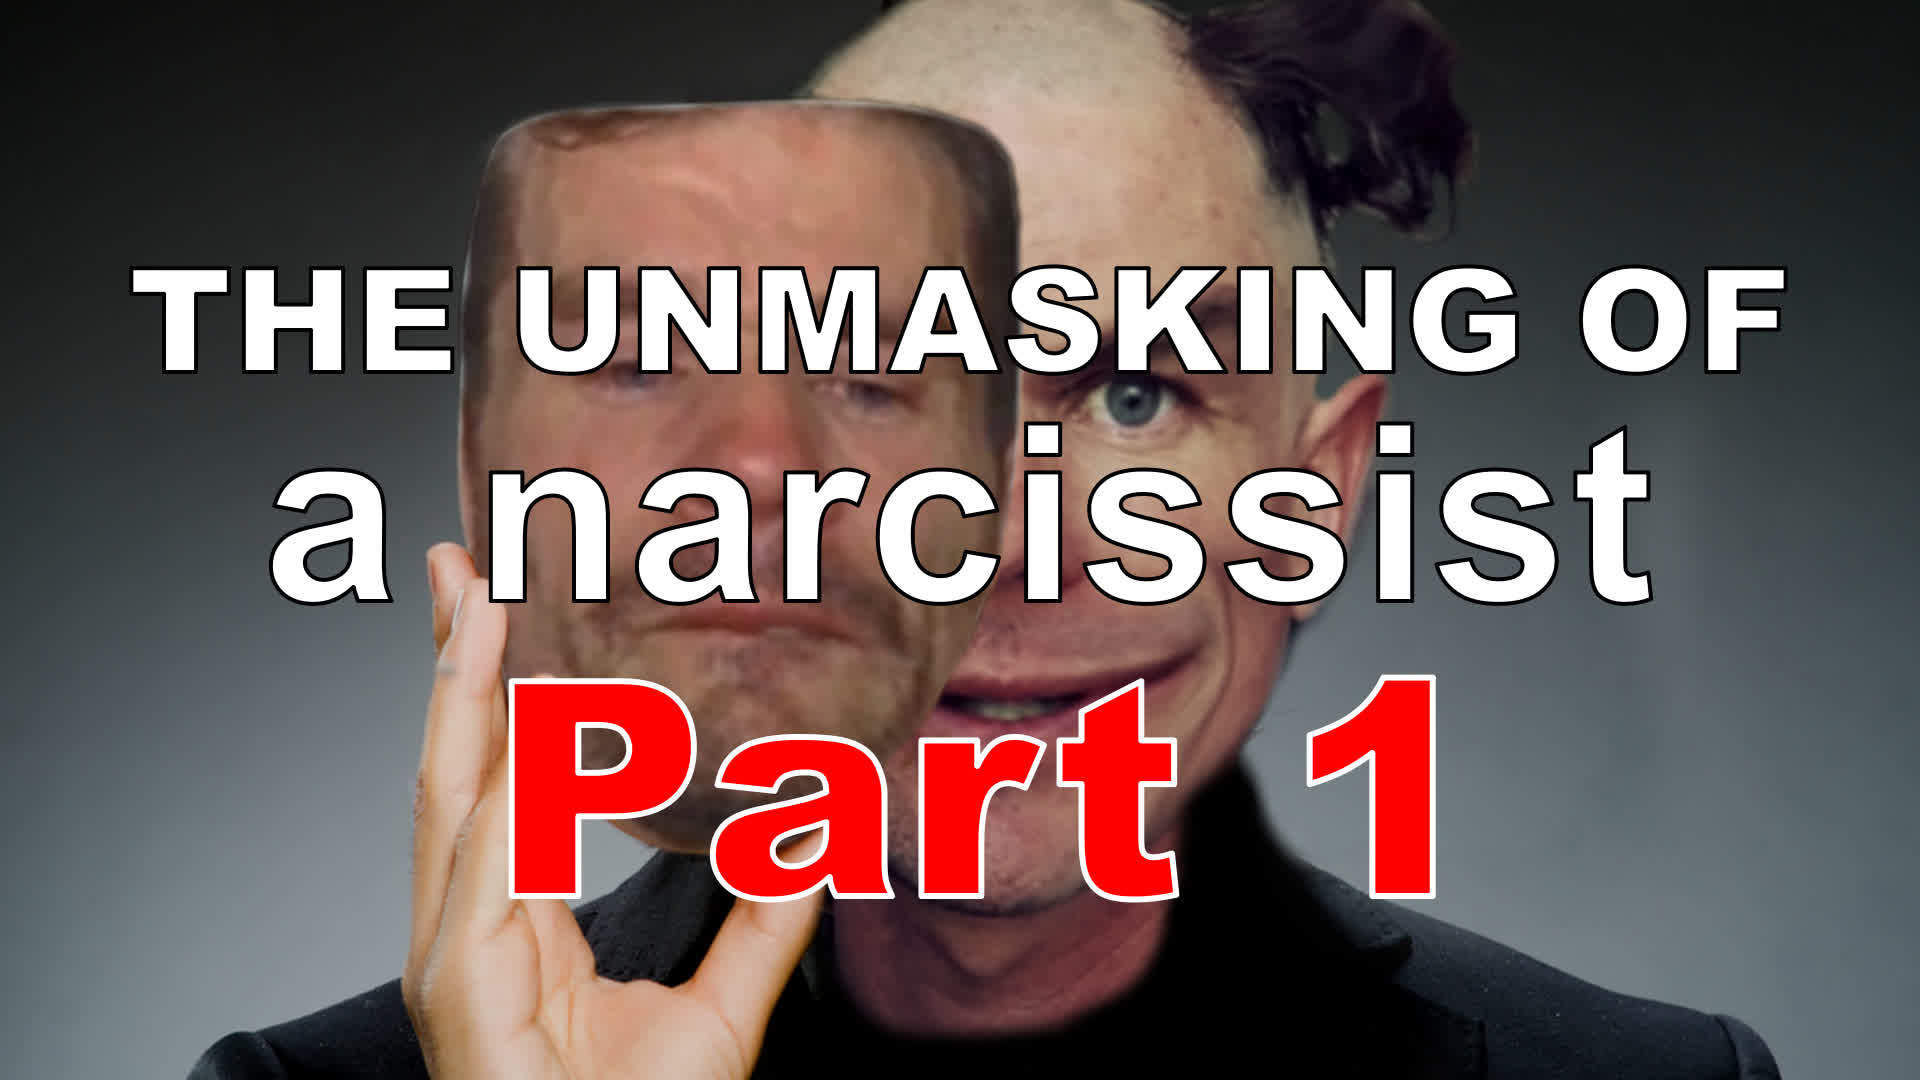 THE UNMASKING, part 1 - The Narcissist - Thumbnail.jpg